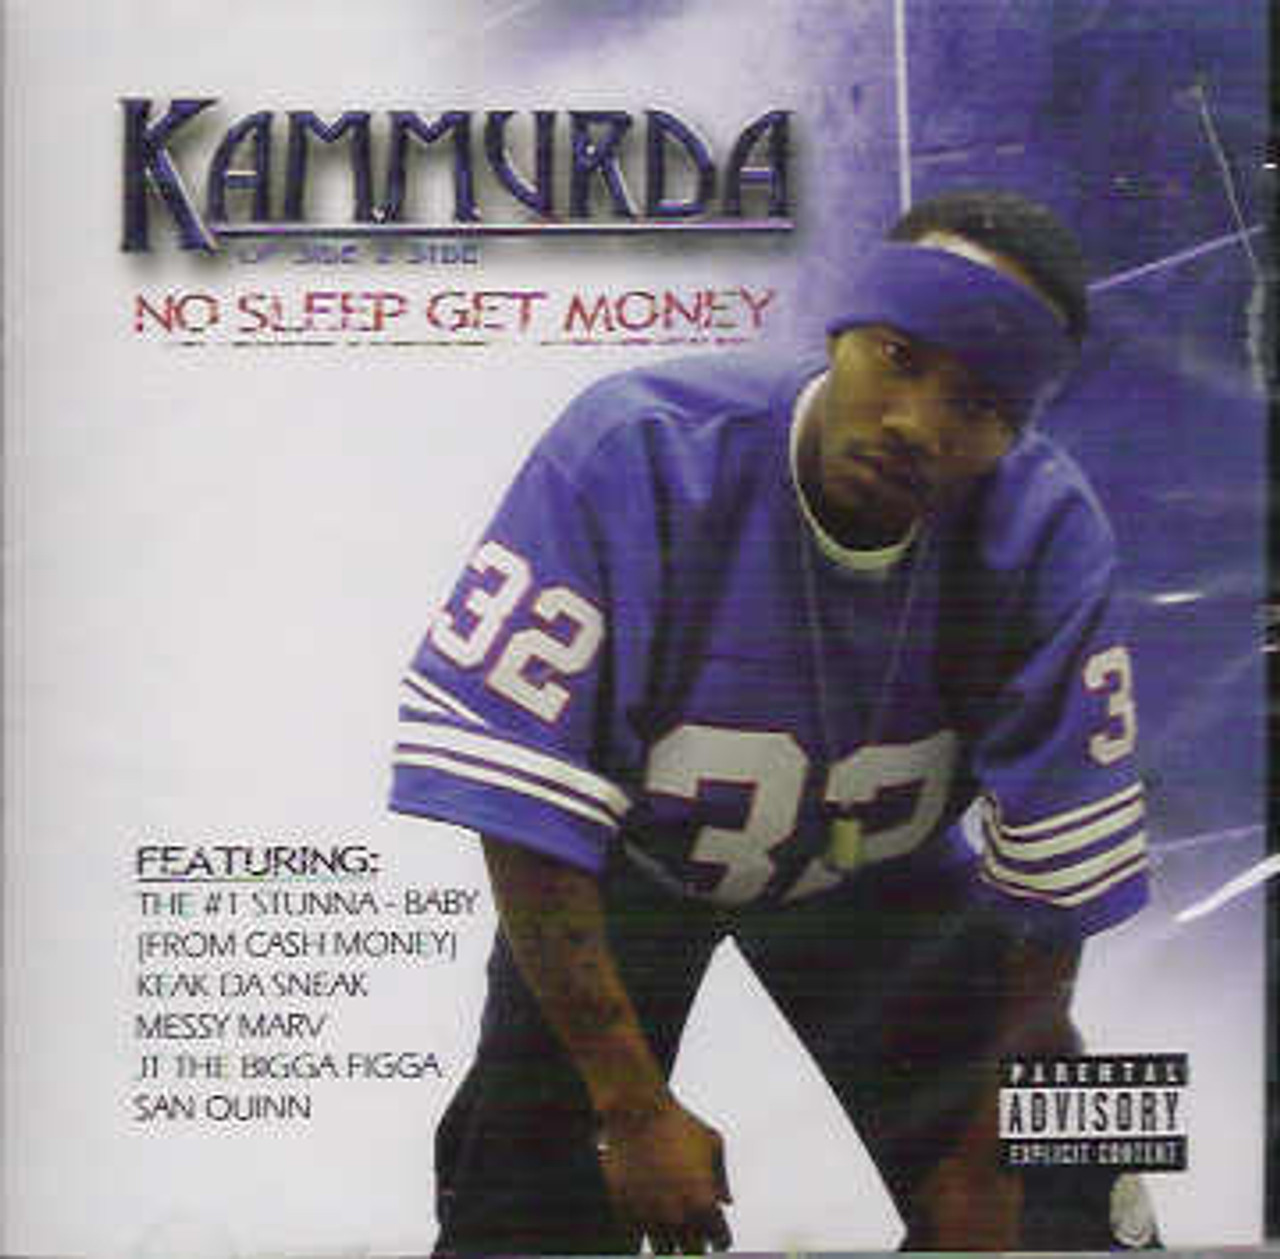 KamMurda of Side 2 Syde - No Sleep Get Money CD